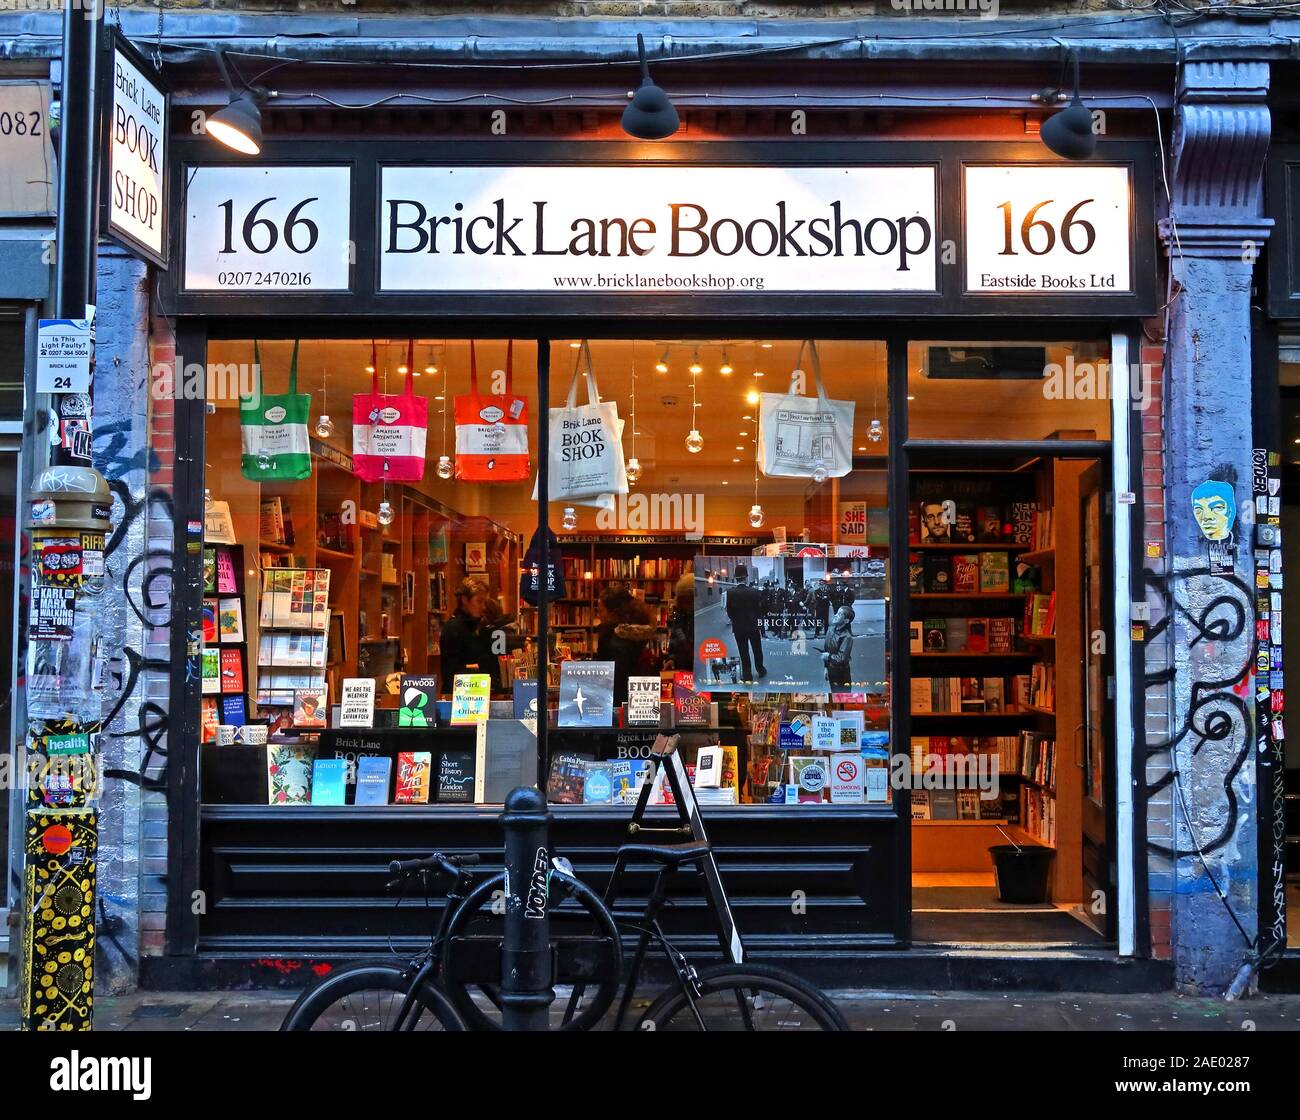 Eastside Books ltd - 166 Brick Lane Bookshop, Brick Lane, near Spitalfields, East End, London, England, UK, E1 6RU Stockfoto